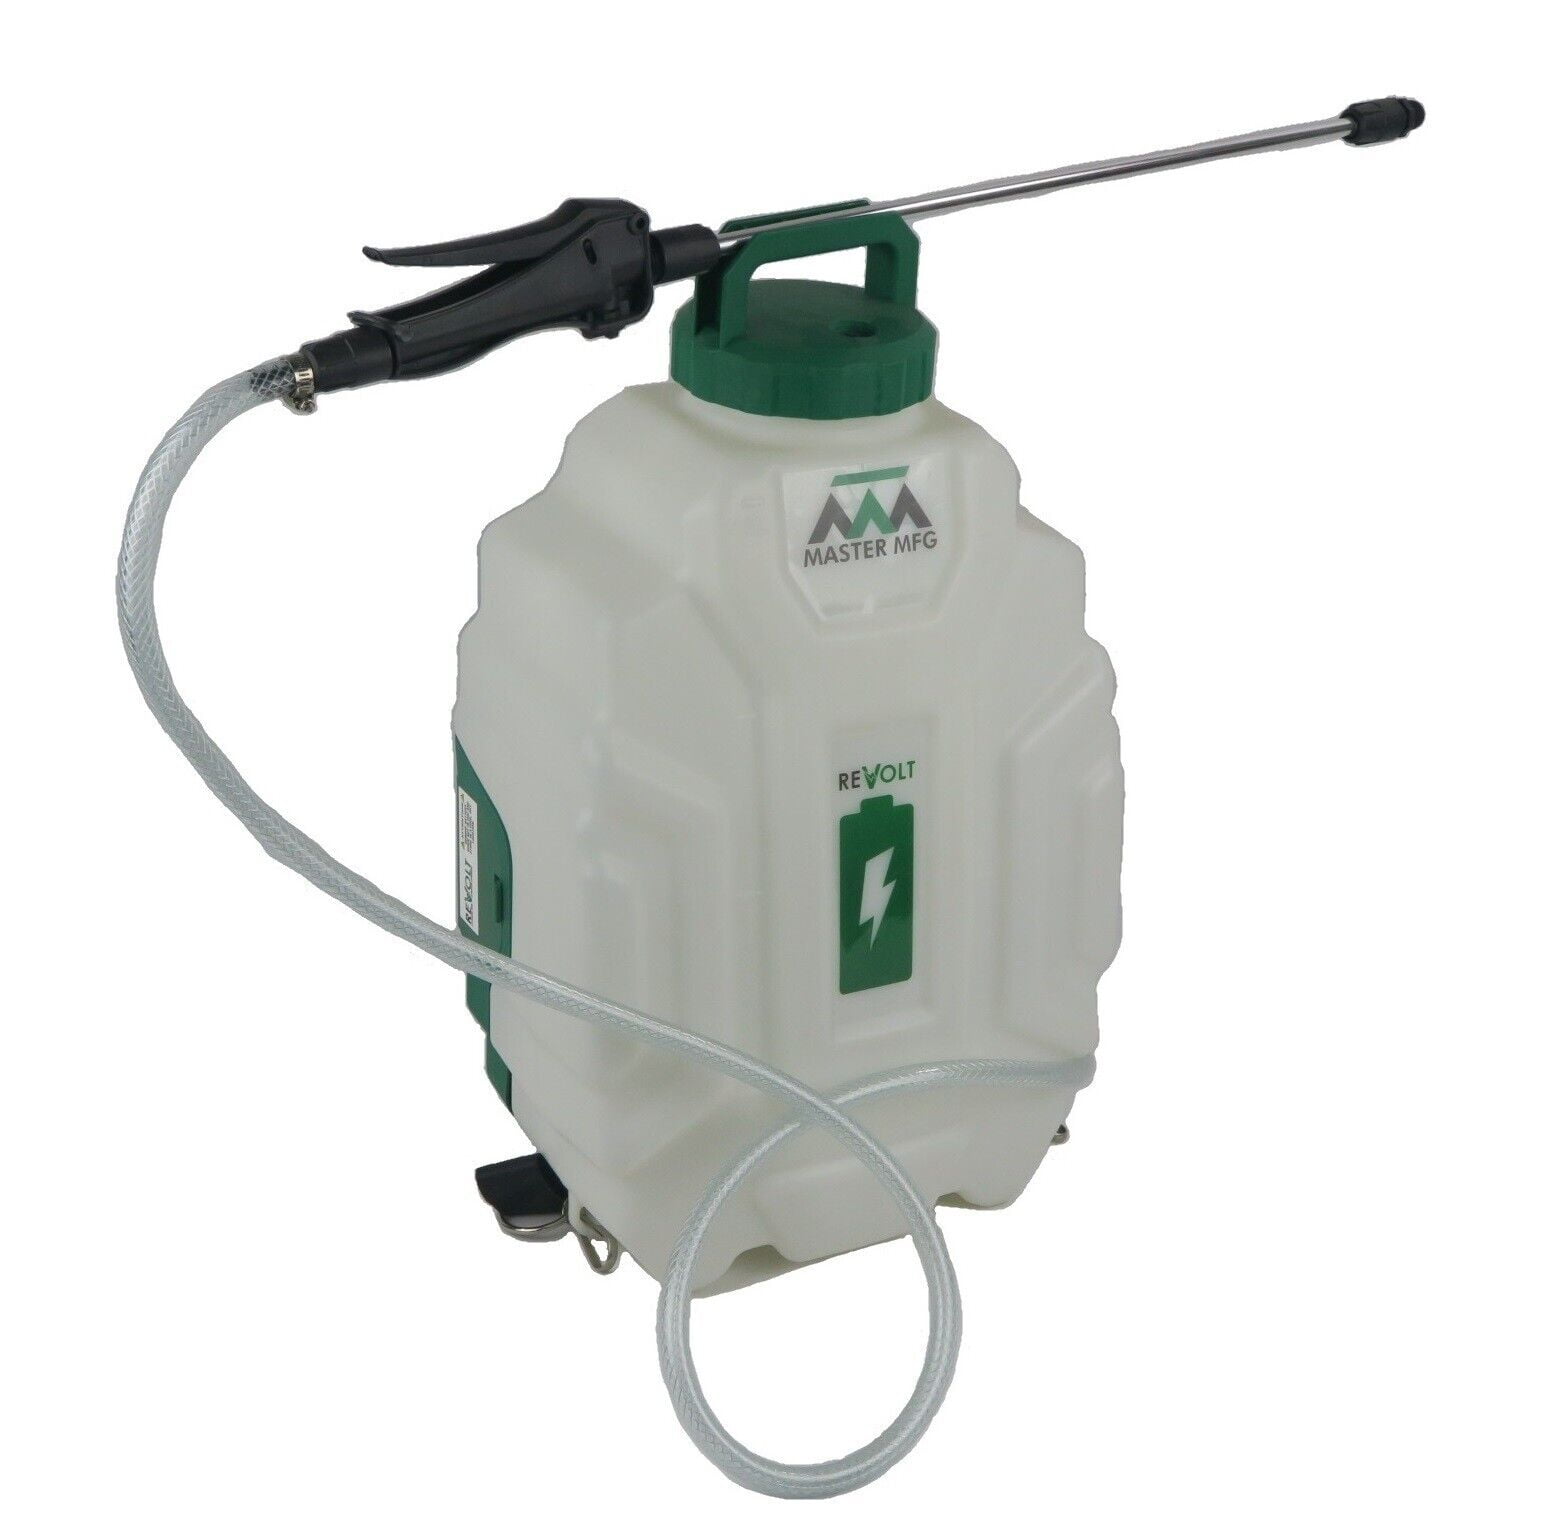 Yard Mastery 4-Gallon Battery Backpack Sprayer